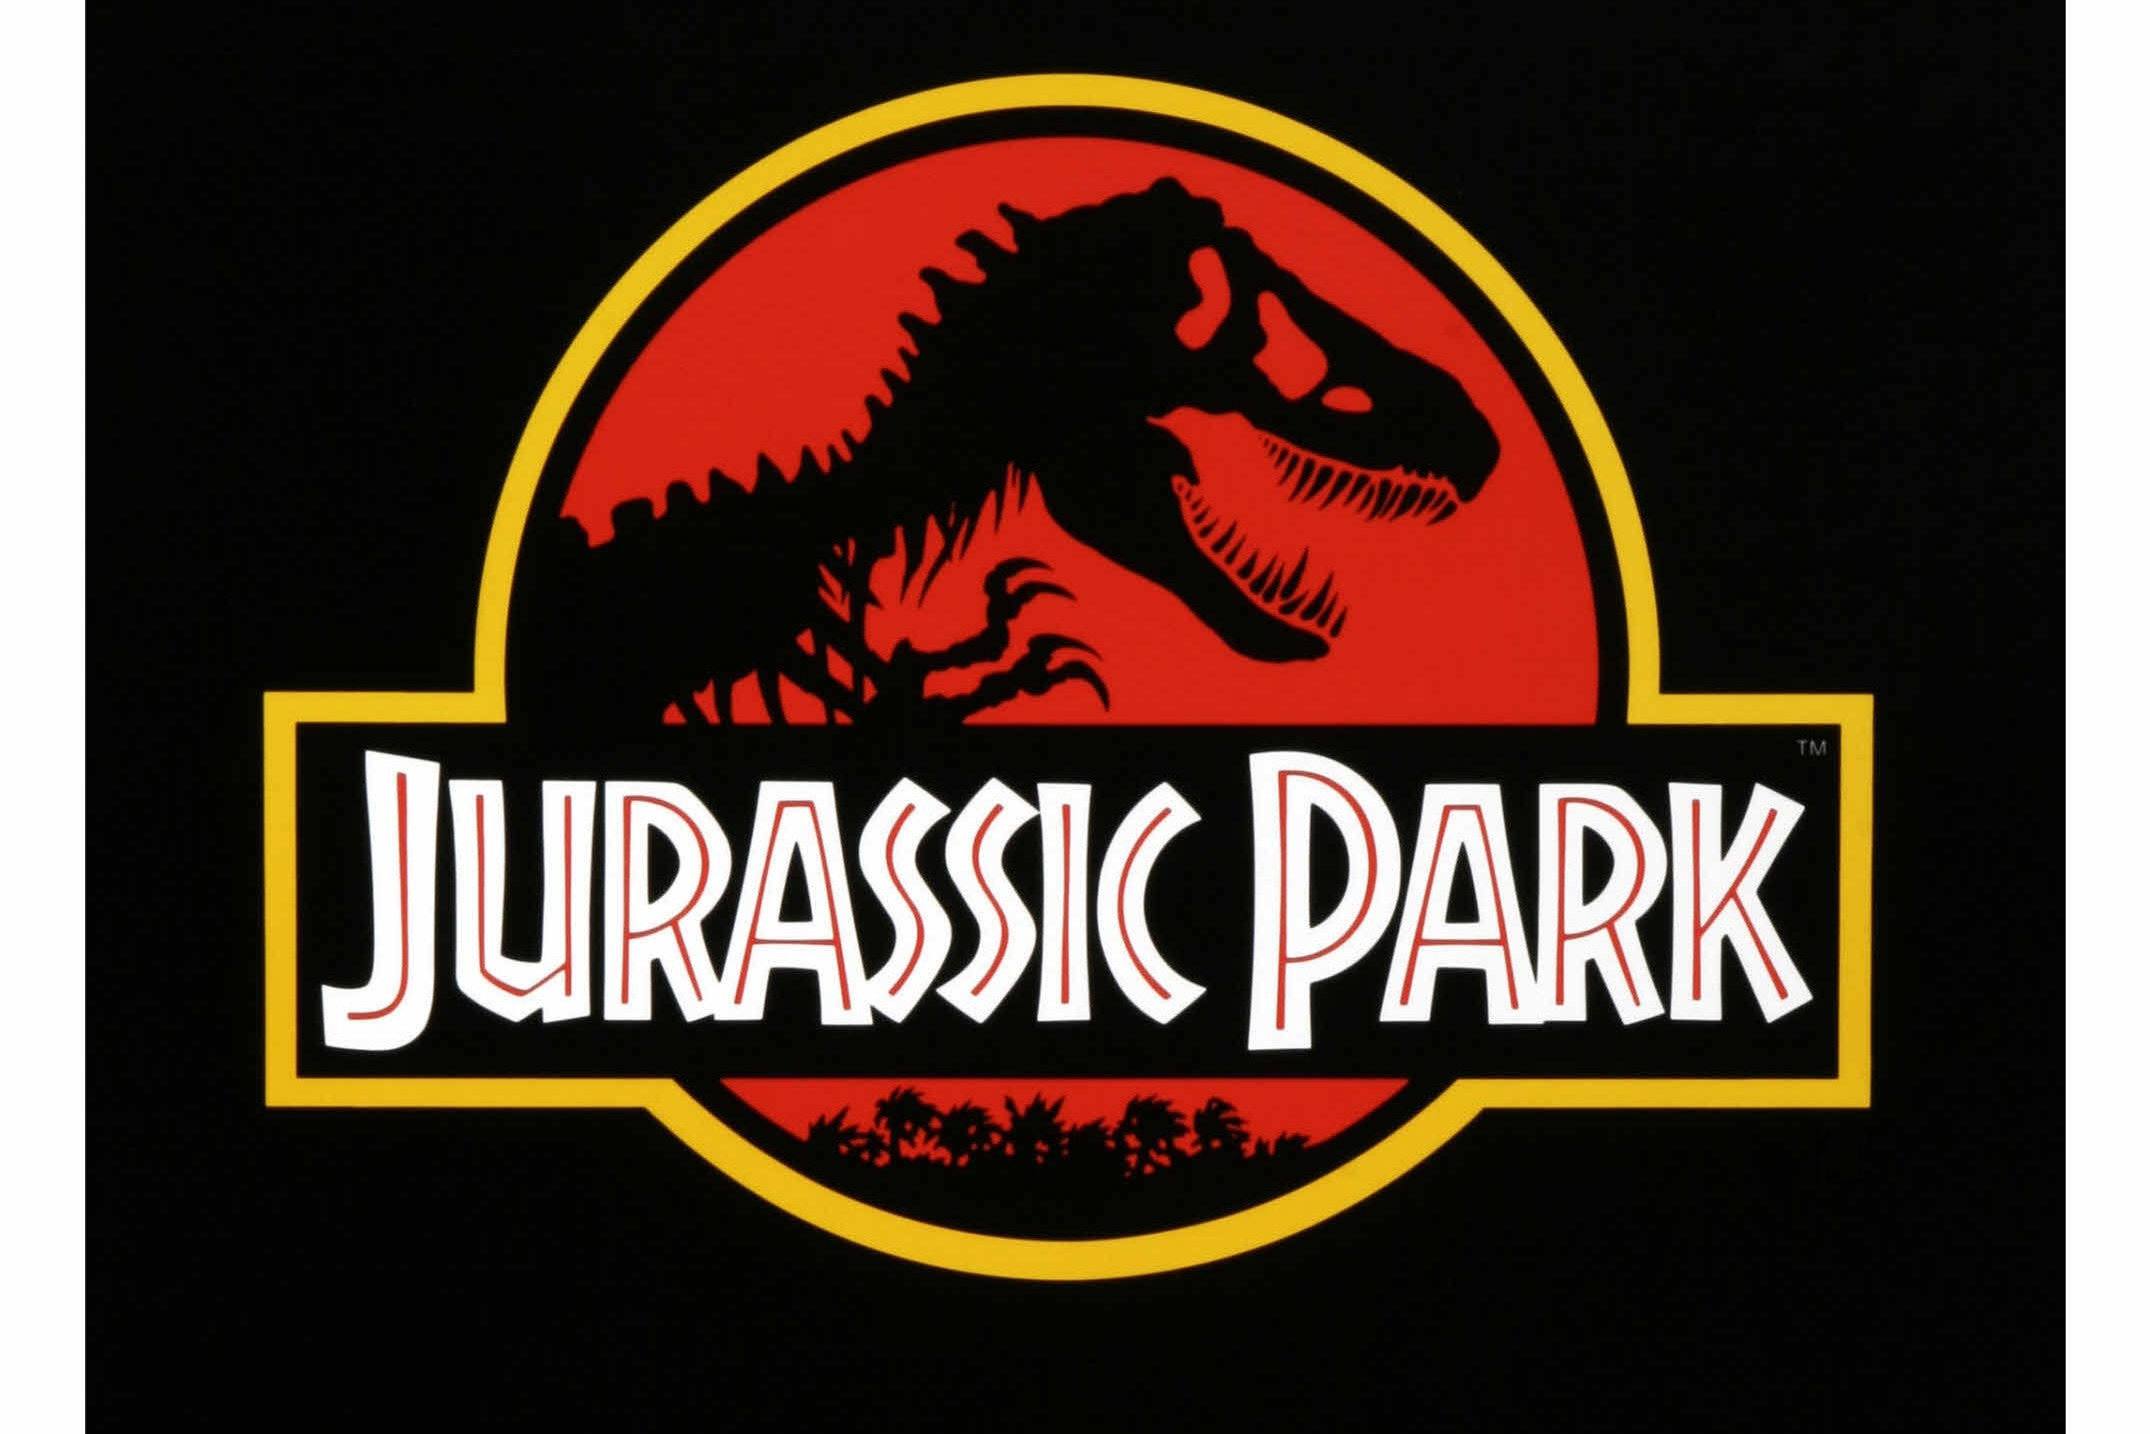 Jurassic Park theaterposter